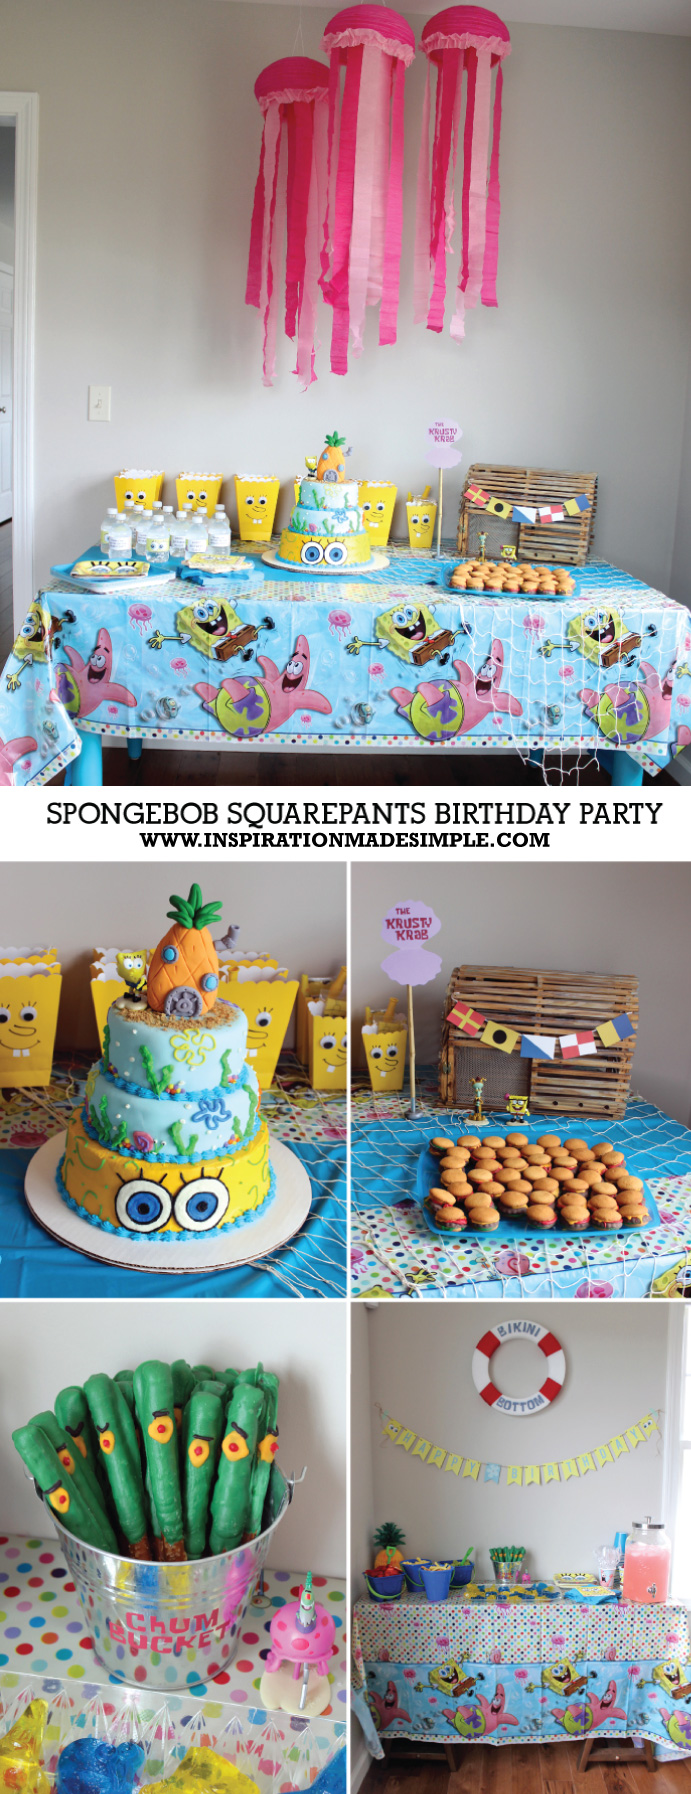 DIY Spongebob Squarepants Birthday Party